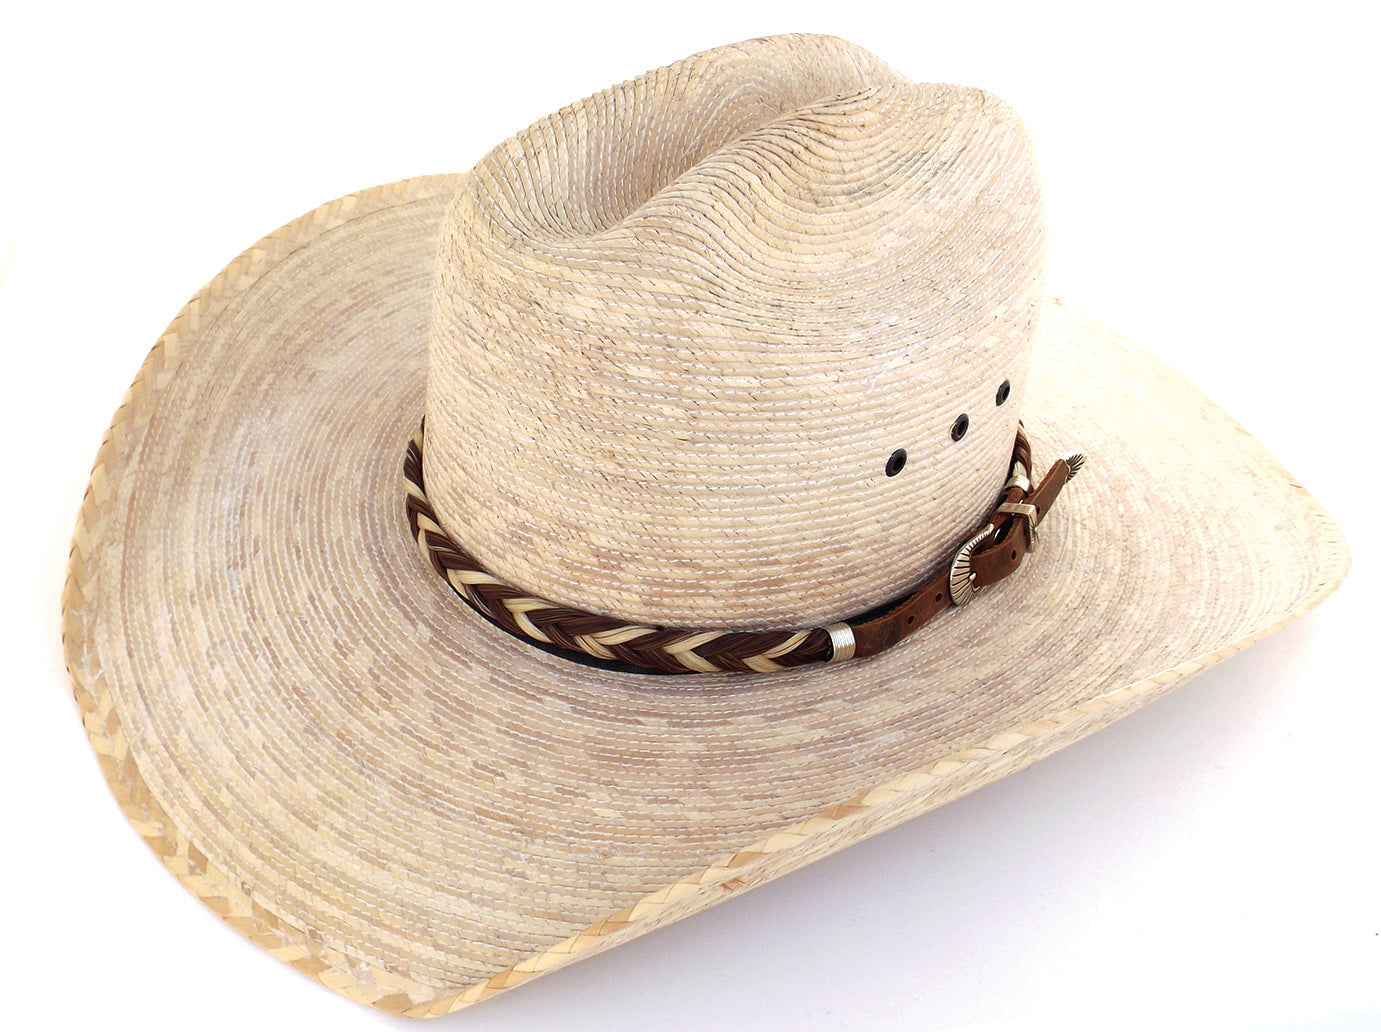 Hatband Starter Package*Cowboy